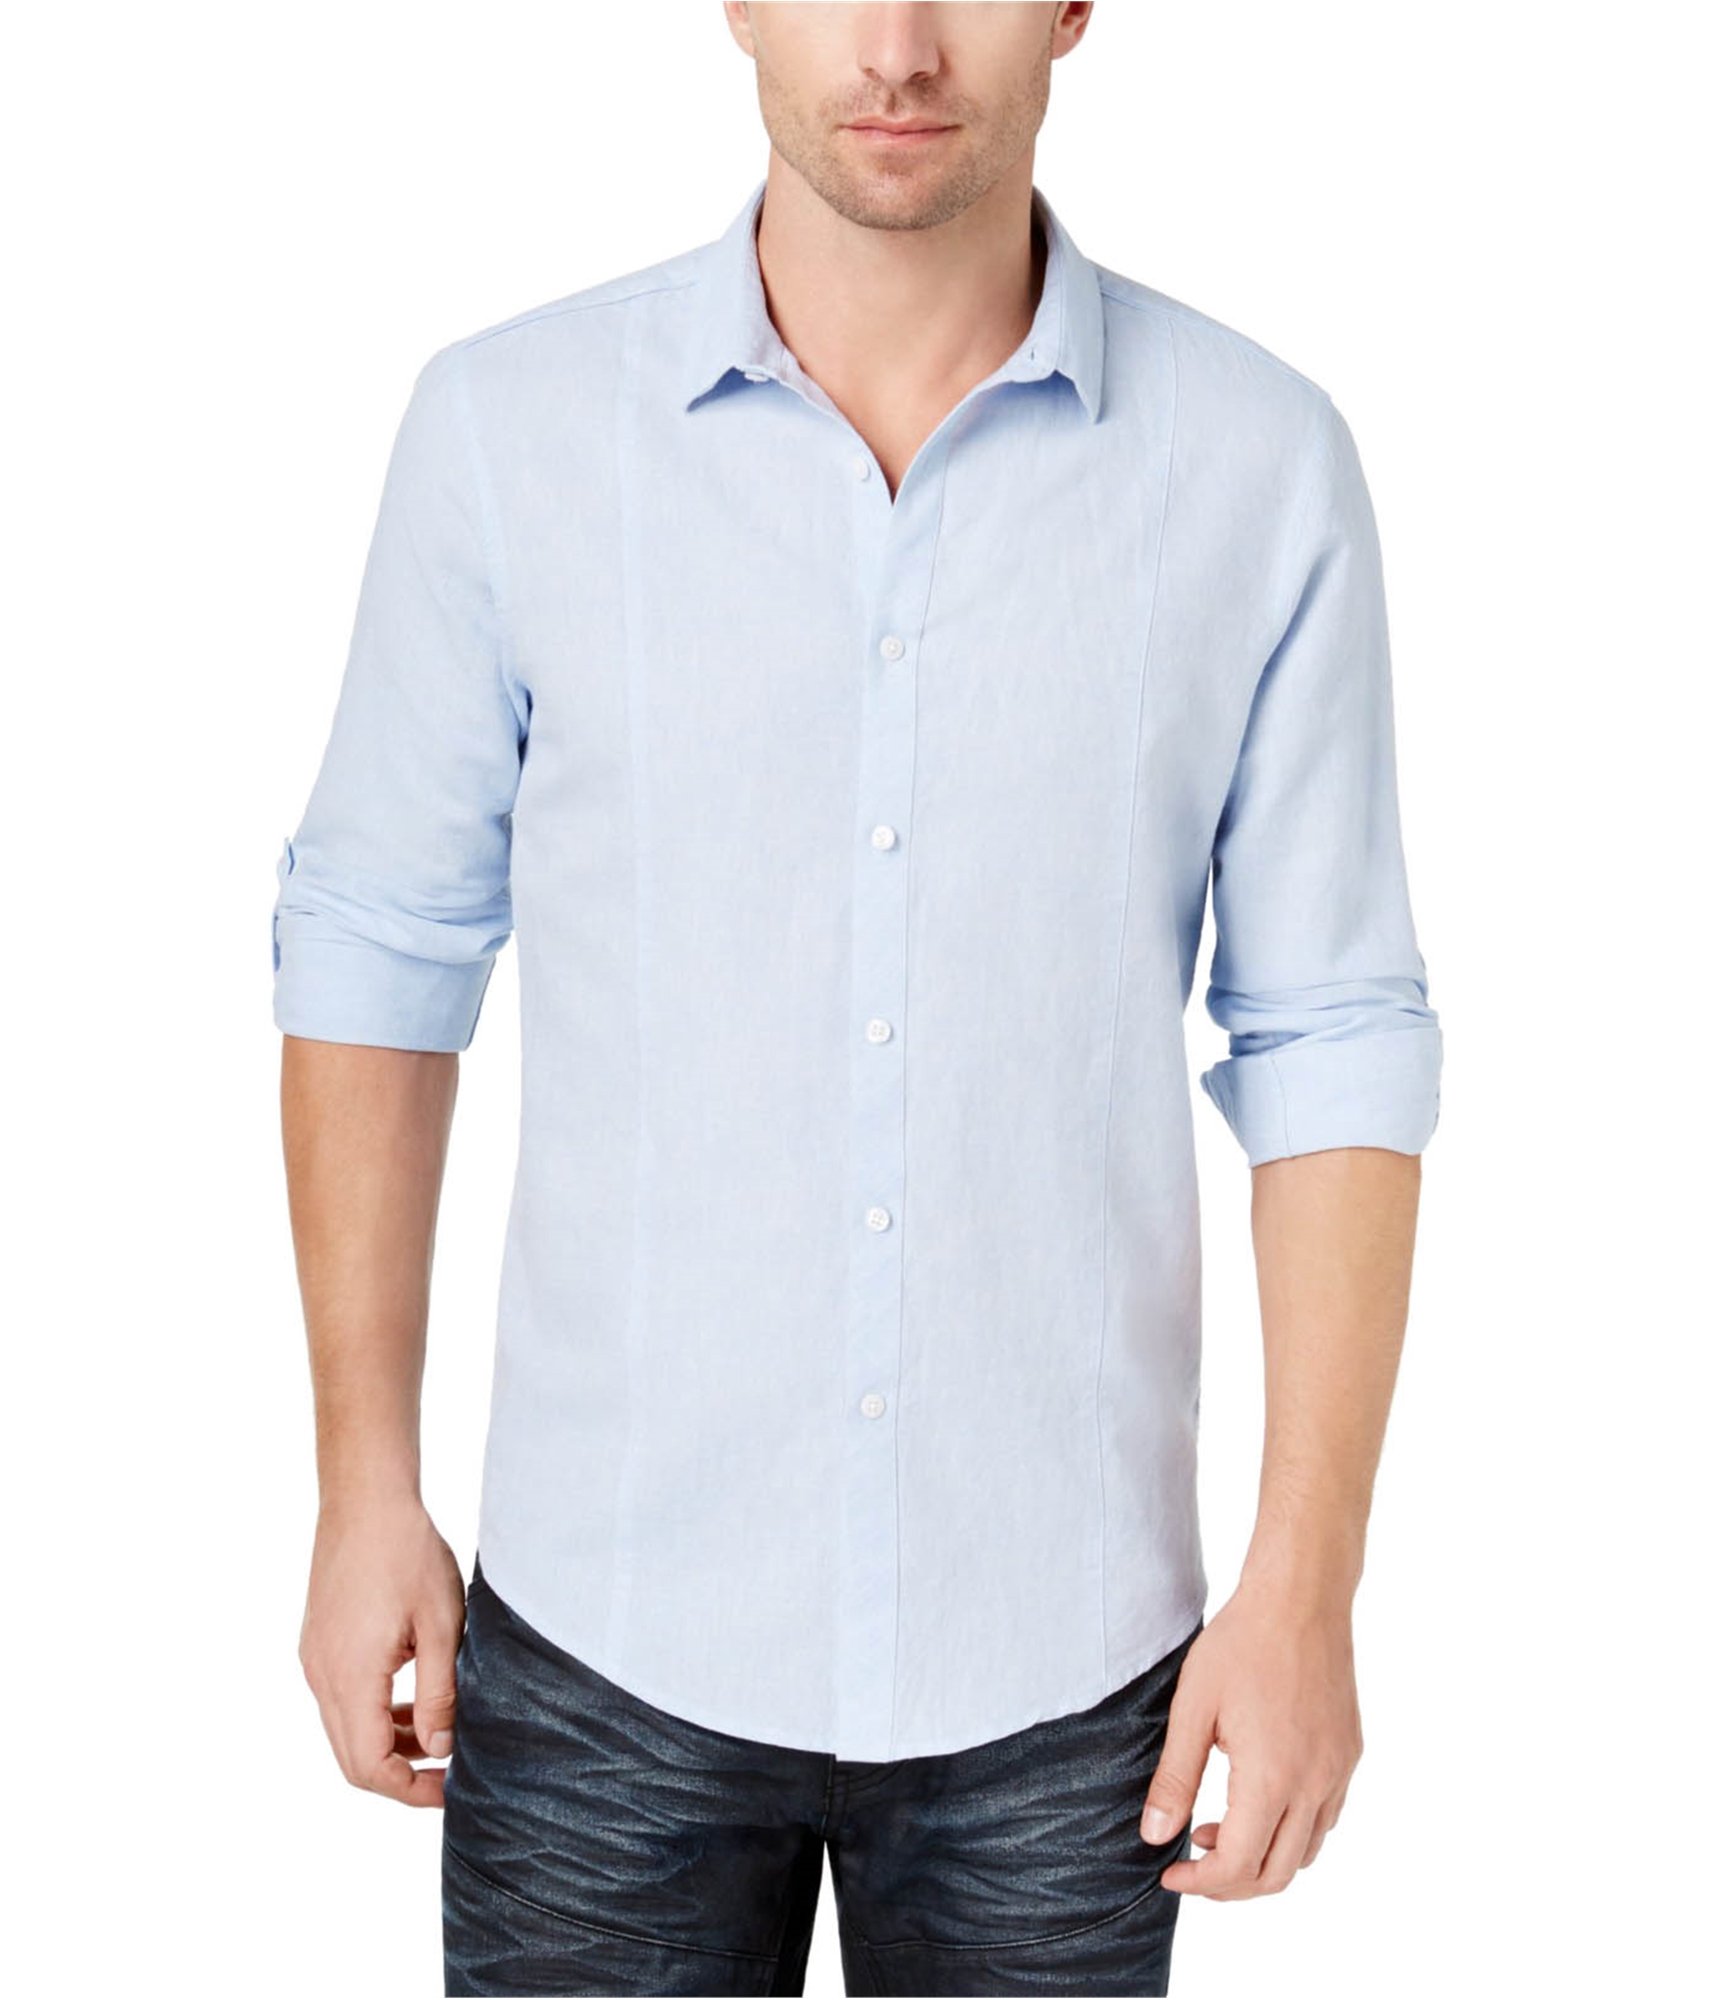 Man-wearing-button-up-shirt